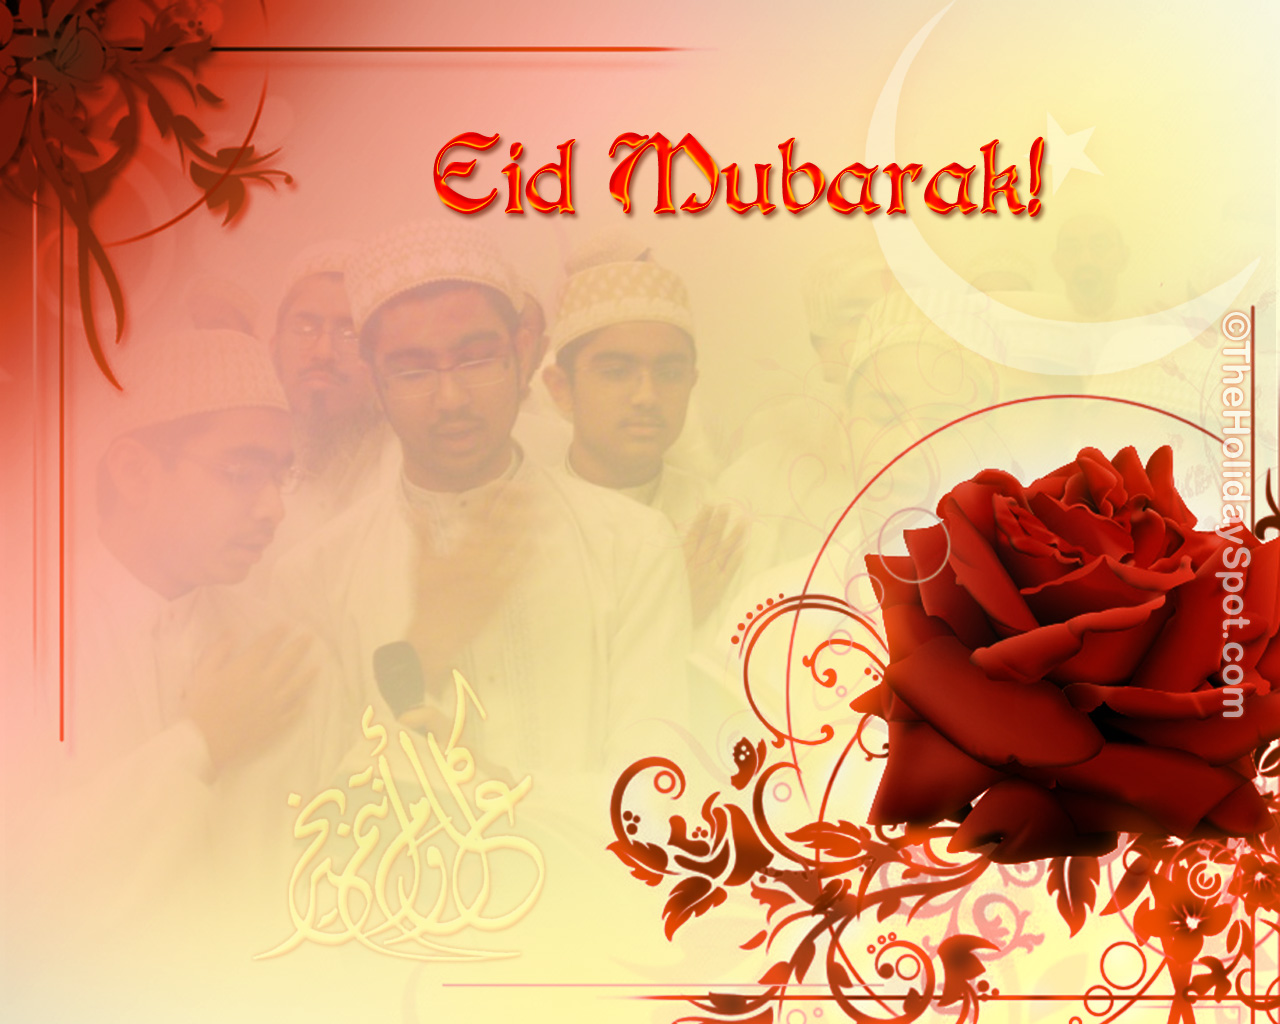 eid-mubarak-wallpaper.jpg (1280×1024)